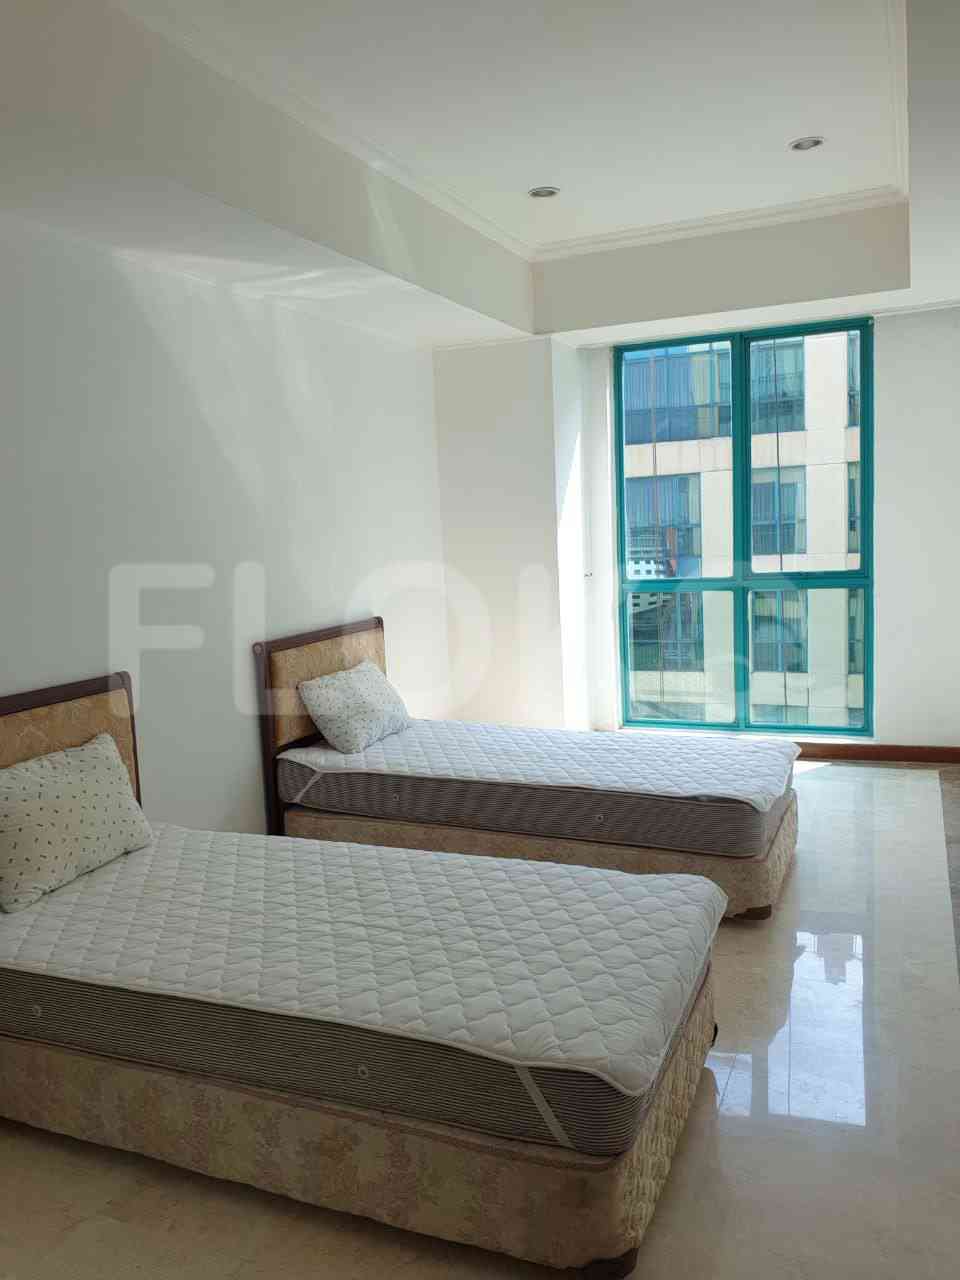 3 Bedroom on 15th Floor for Rent in Casablanca Apartment - ftebc2 5